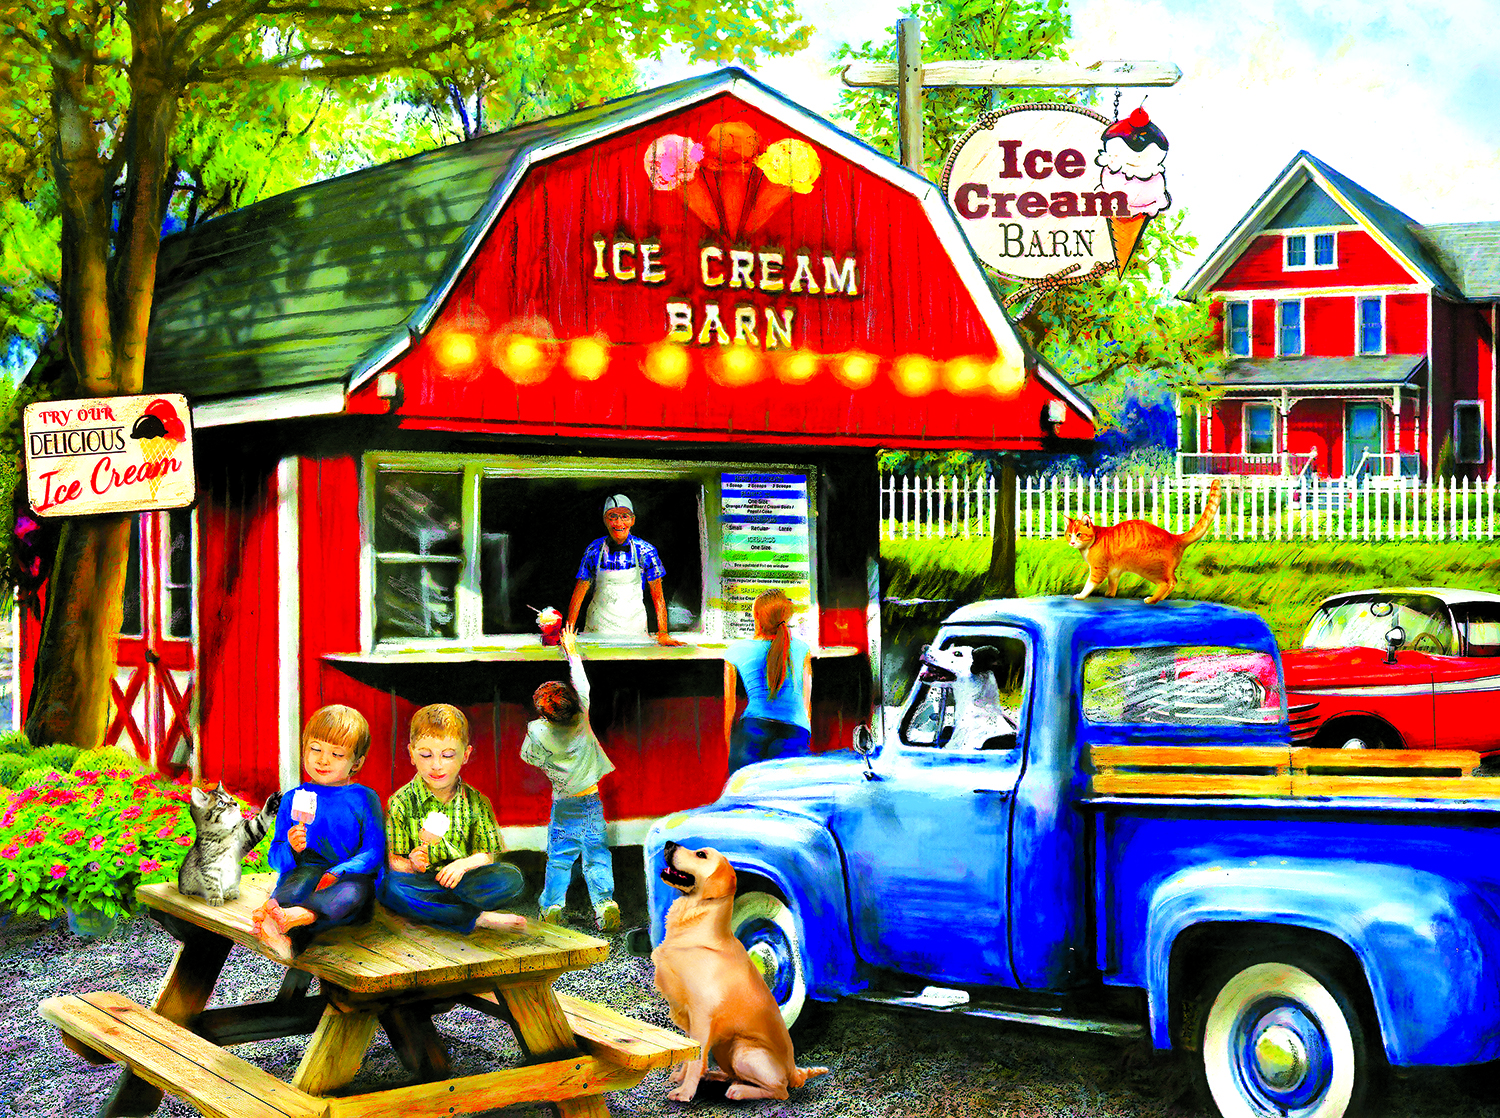 SO-28858 - The Ice Cream Barn